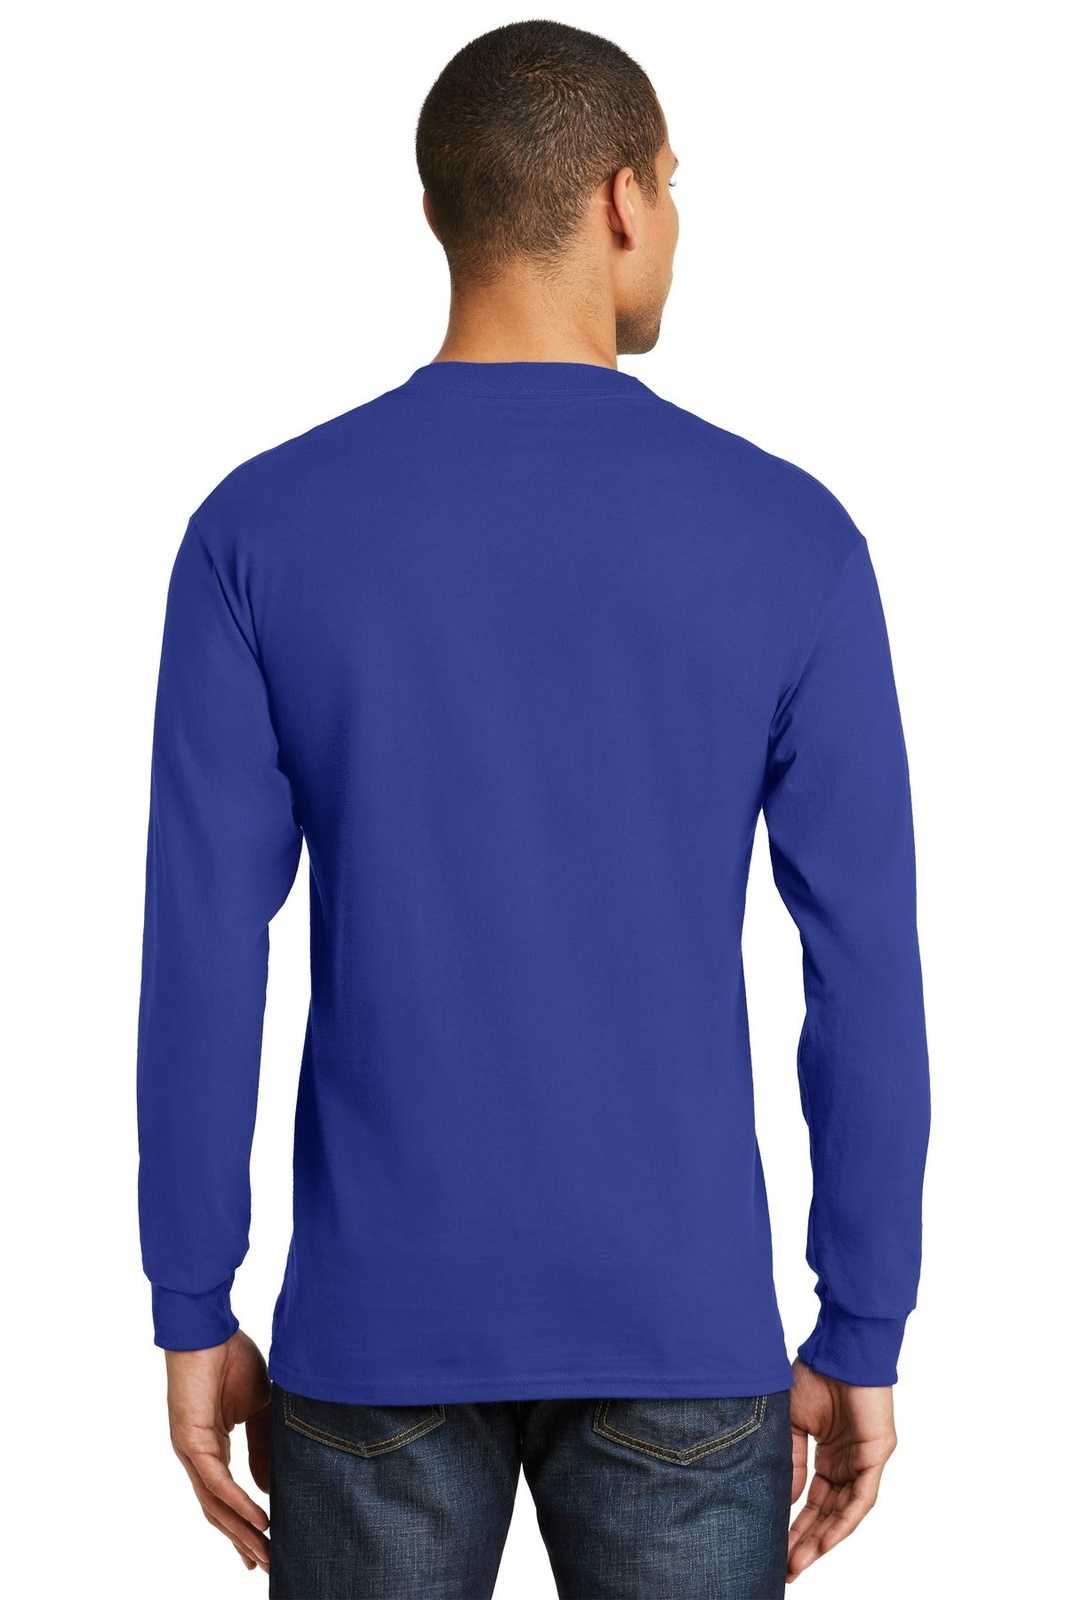 Hanes 5186 Beefy-T 100% Cotton Long Sleeve T-Shirt - Deep Royal - HIT a Double